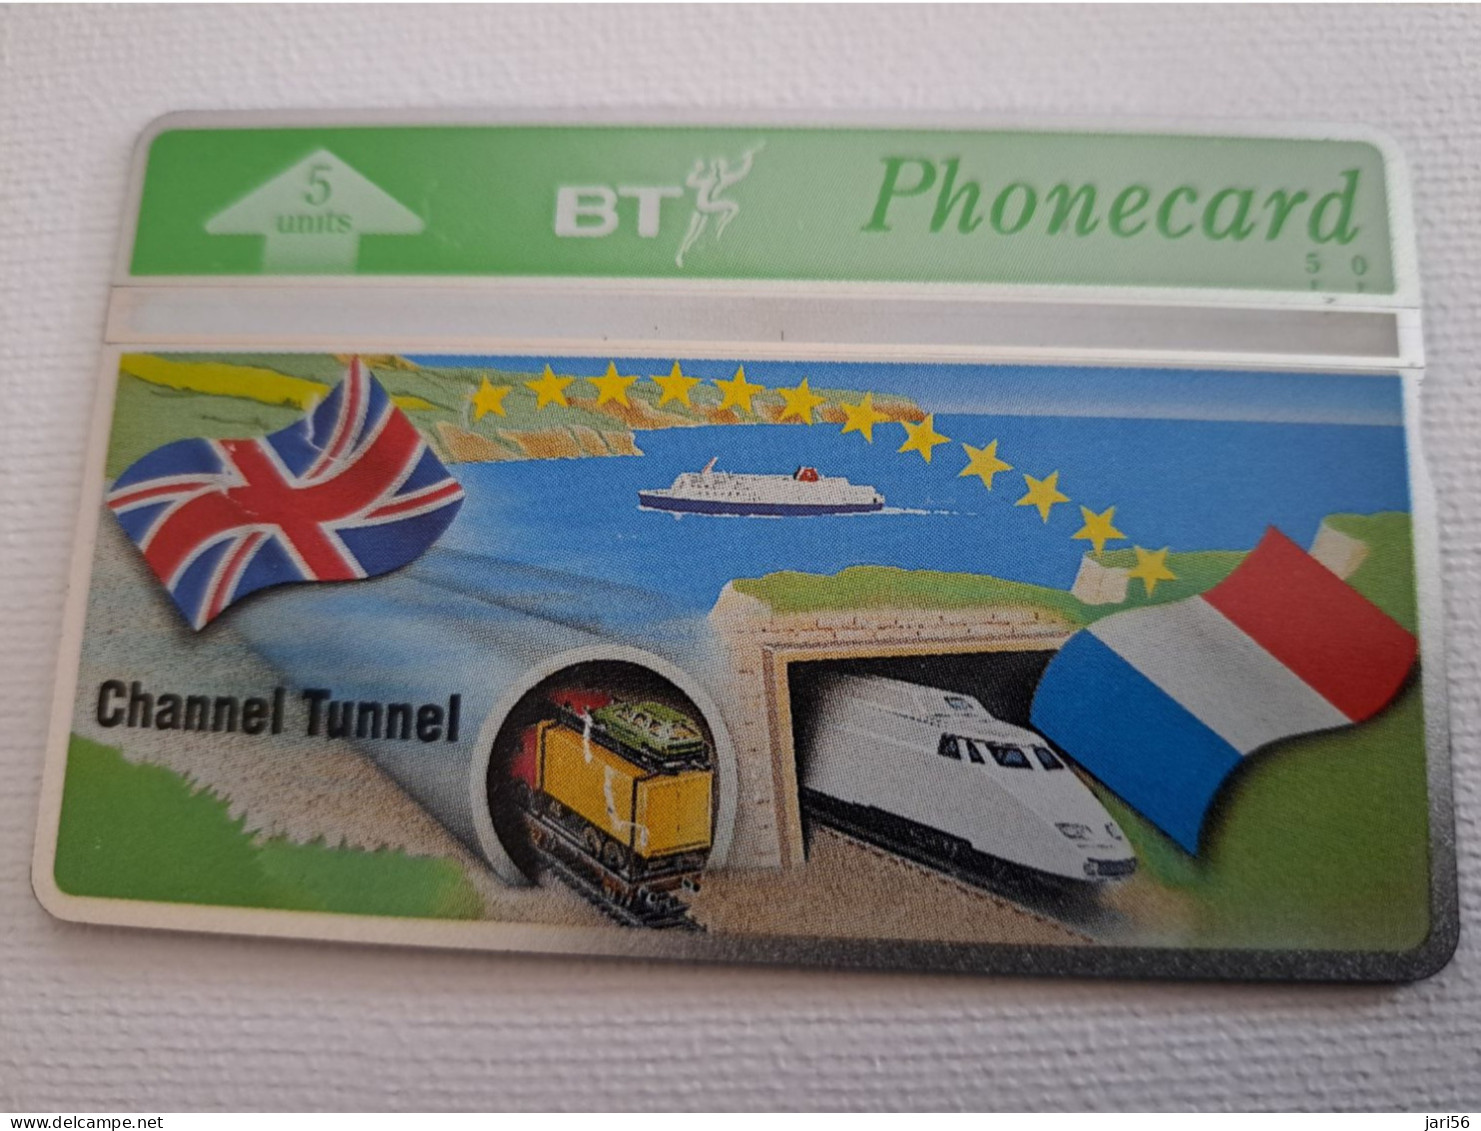 GREAT BRETAGNE/ L & G  5 UNITS / CHANNEL TUNNEL/ TGV TRAIN/   / 405B /  MINT CARD **16576** - BT Edición Extranjera